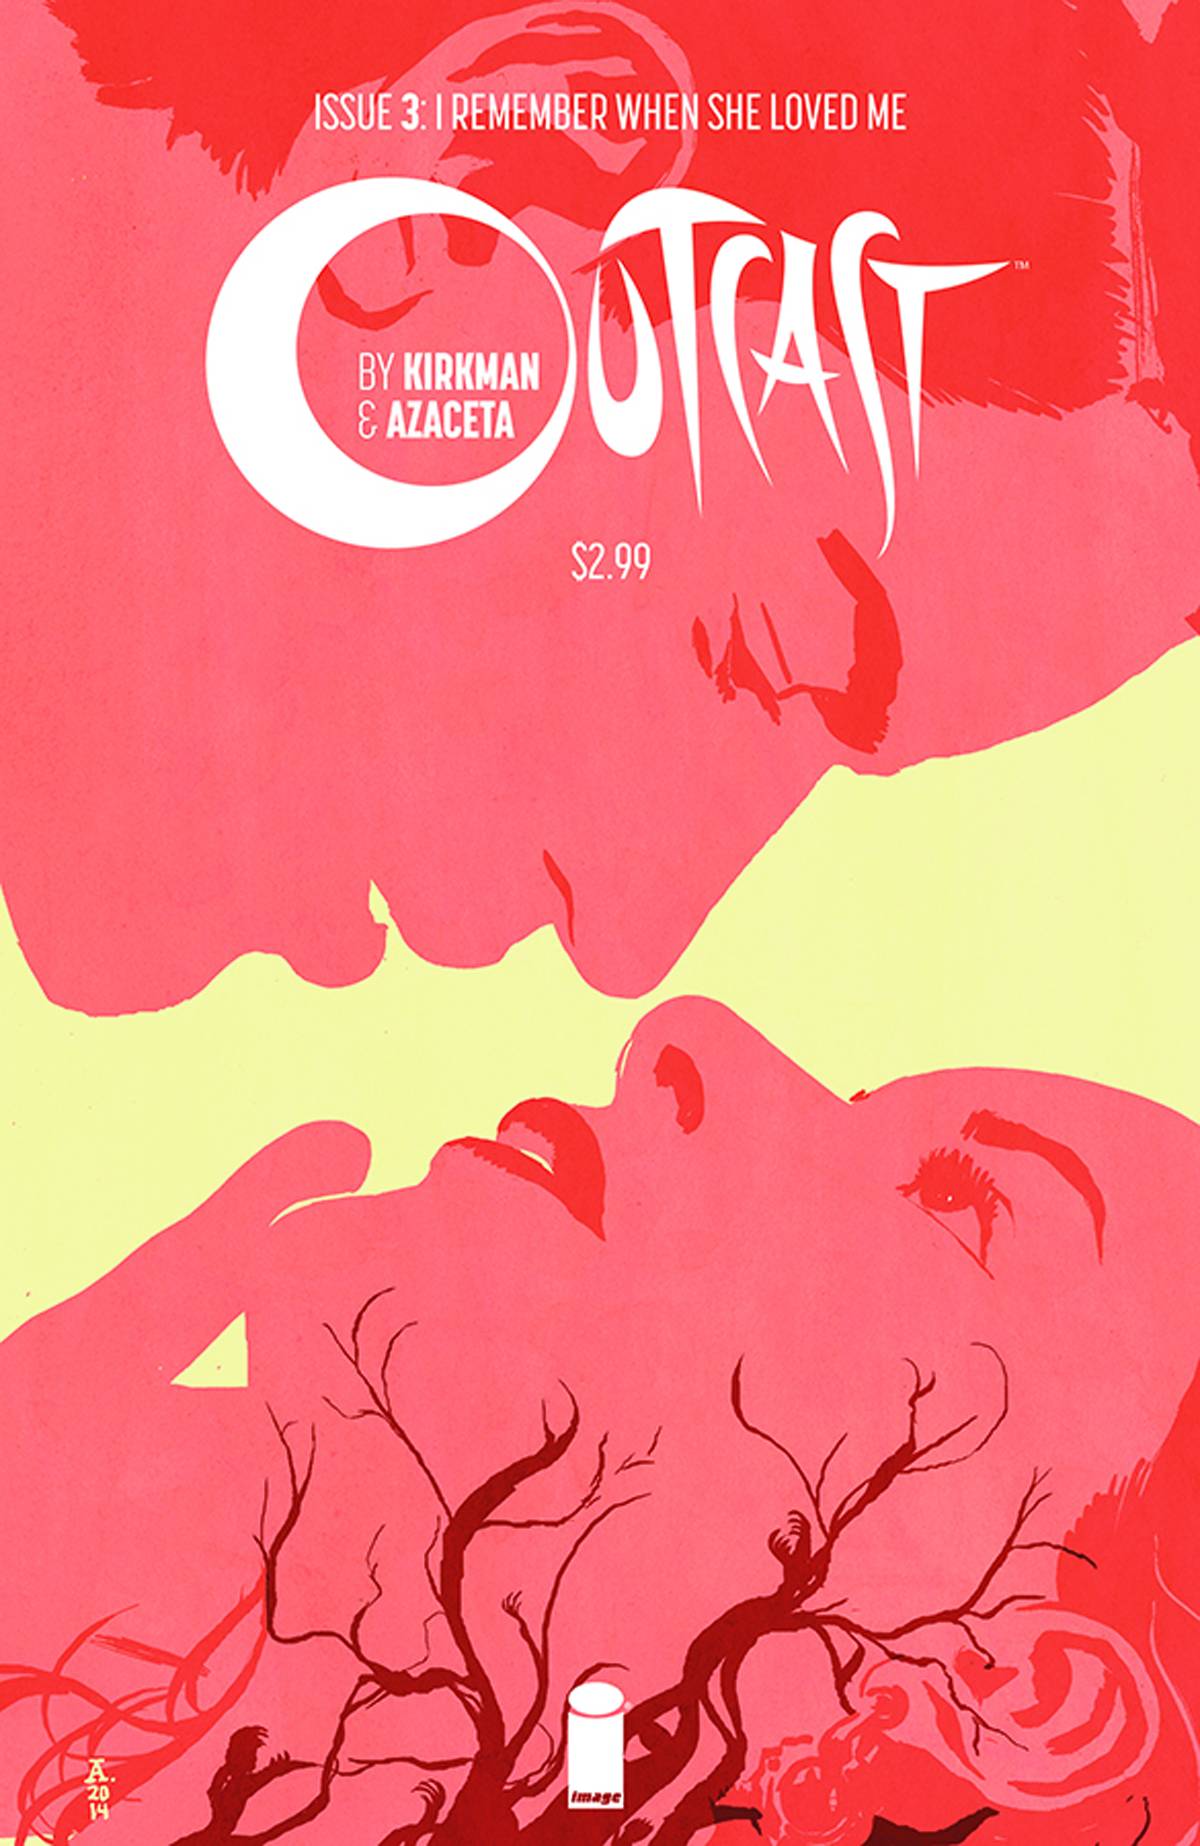 Outcast by Kirkman & Azaceta #3 2nd Printing